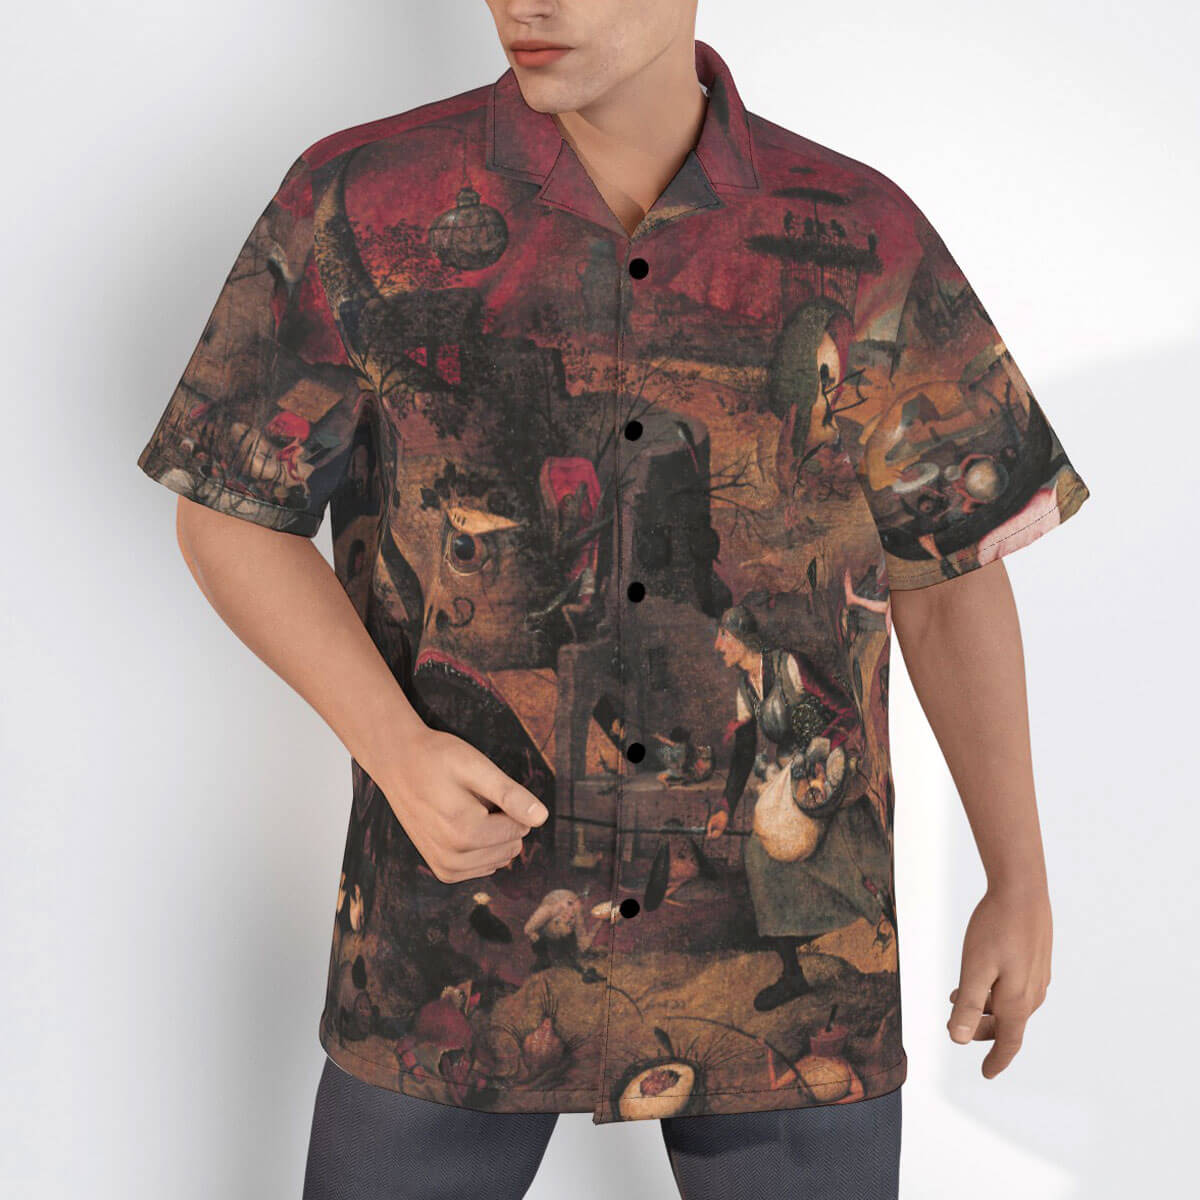 16th-century Netherlandish art on modern Hawaiian shirt design